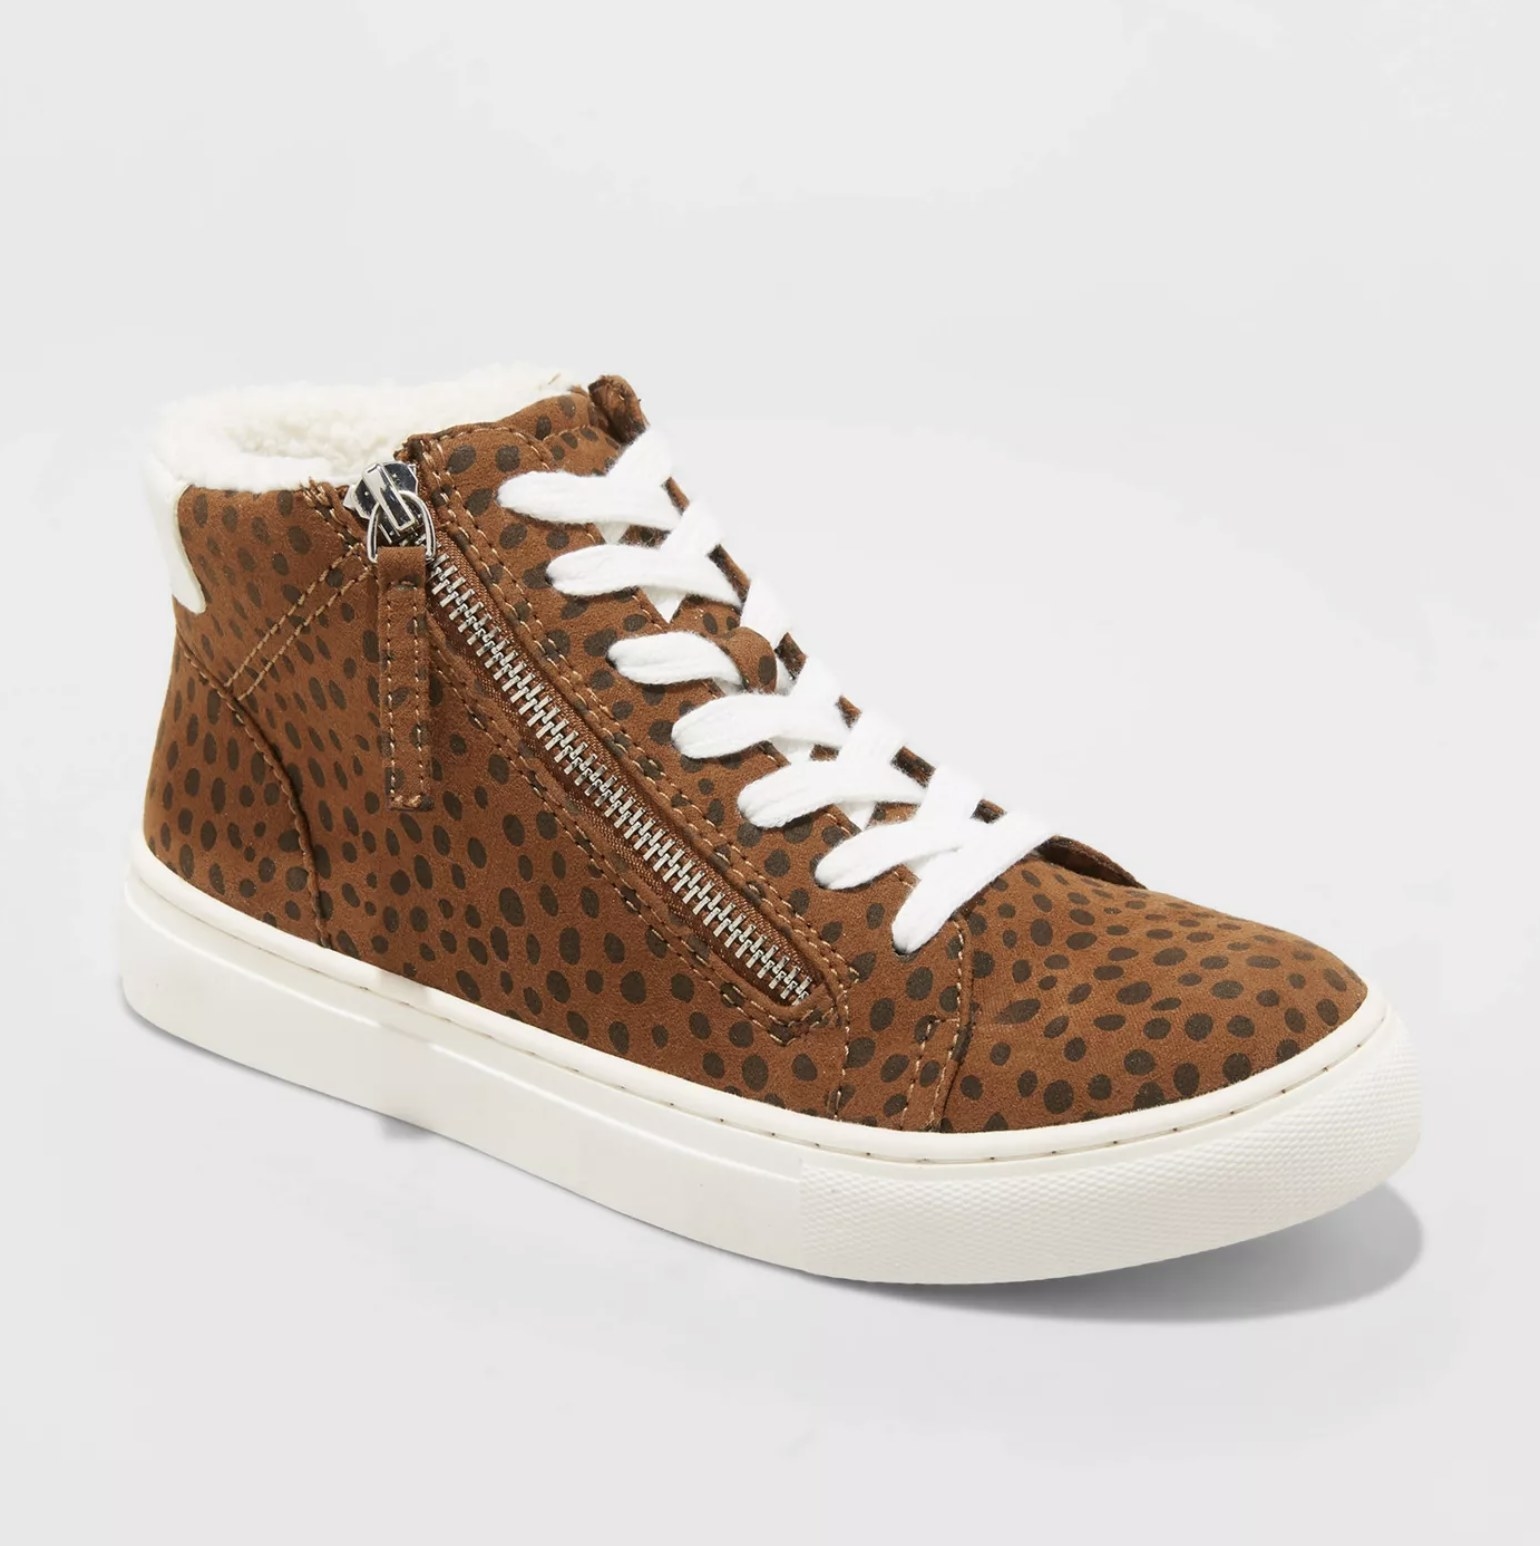 The brown leopard print high top sneaker